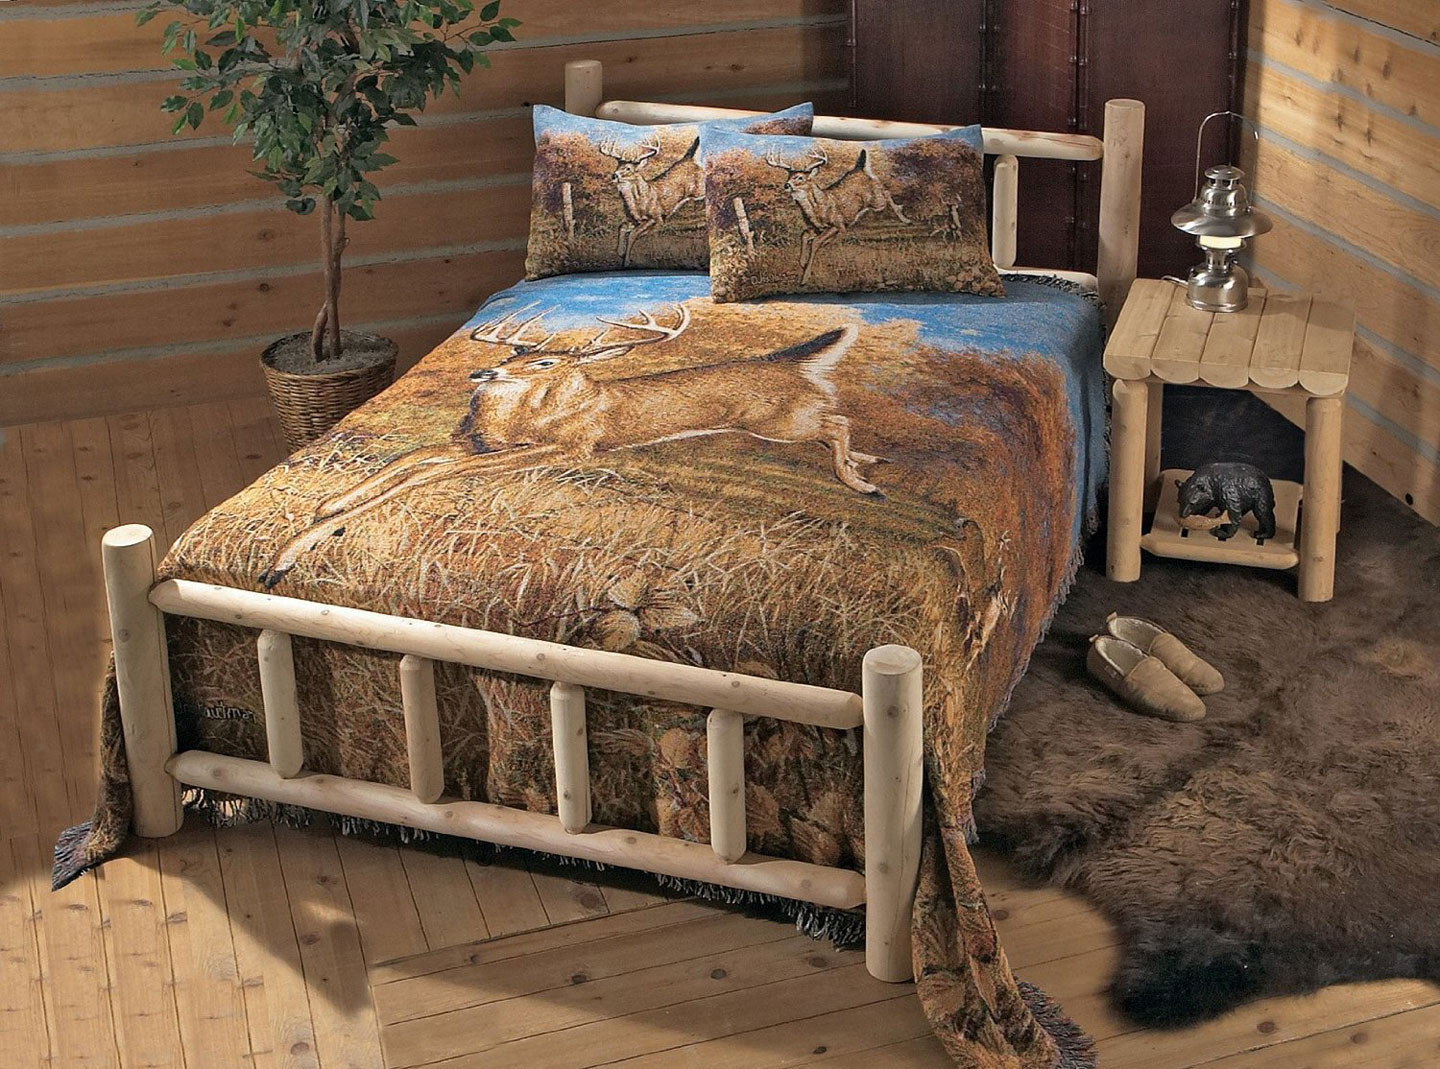 Rustic Wood Bedroom Furniture
 Breathtaking Rustic Bedroom Furniture Sets with Warm